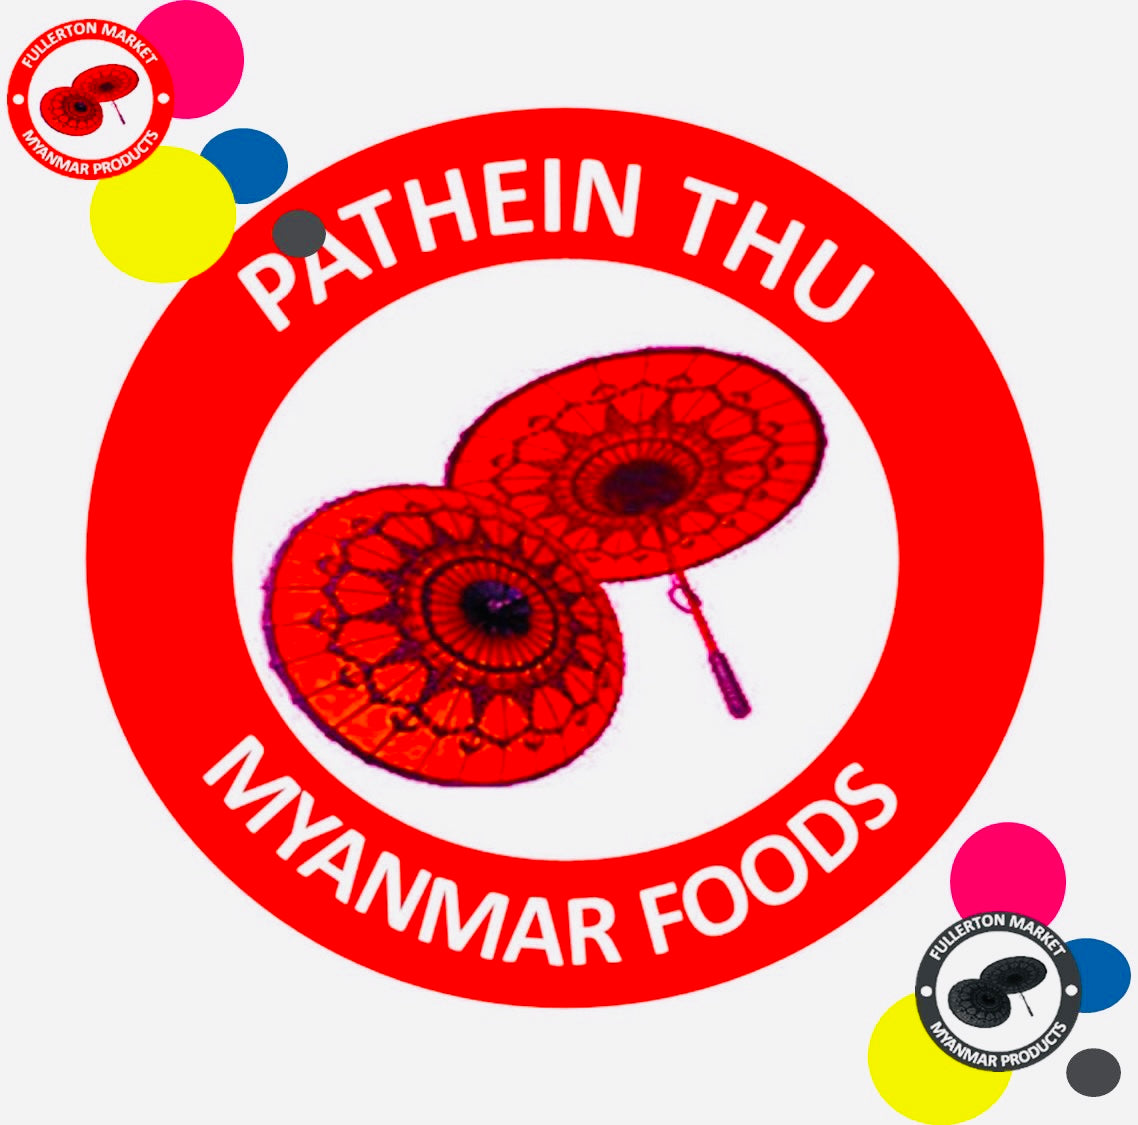 PATHEIN THU Myanmar Foods